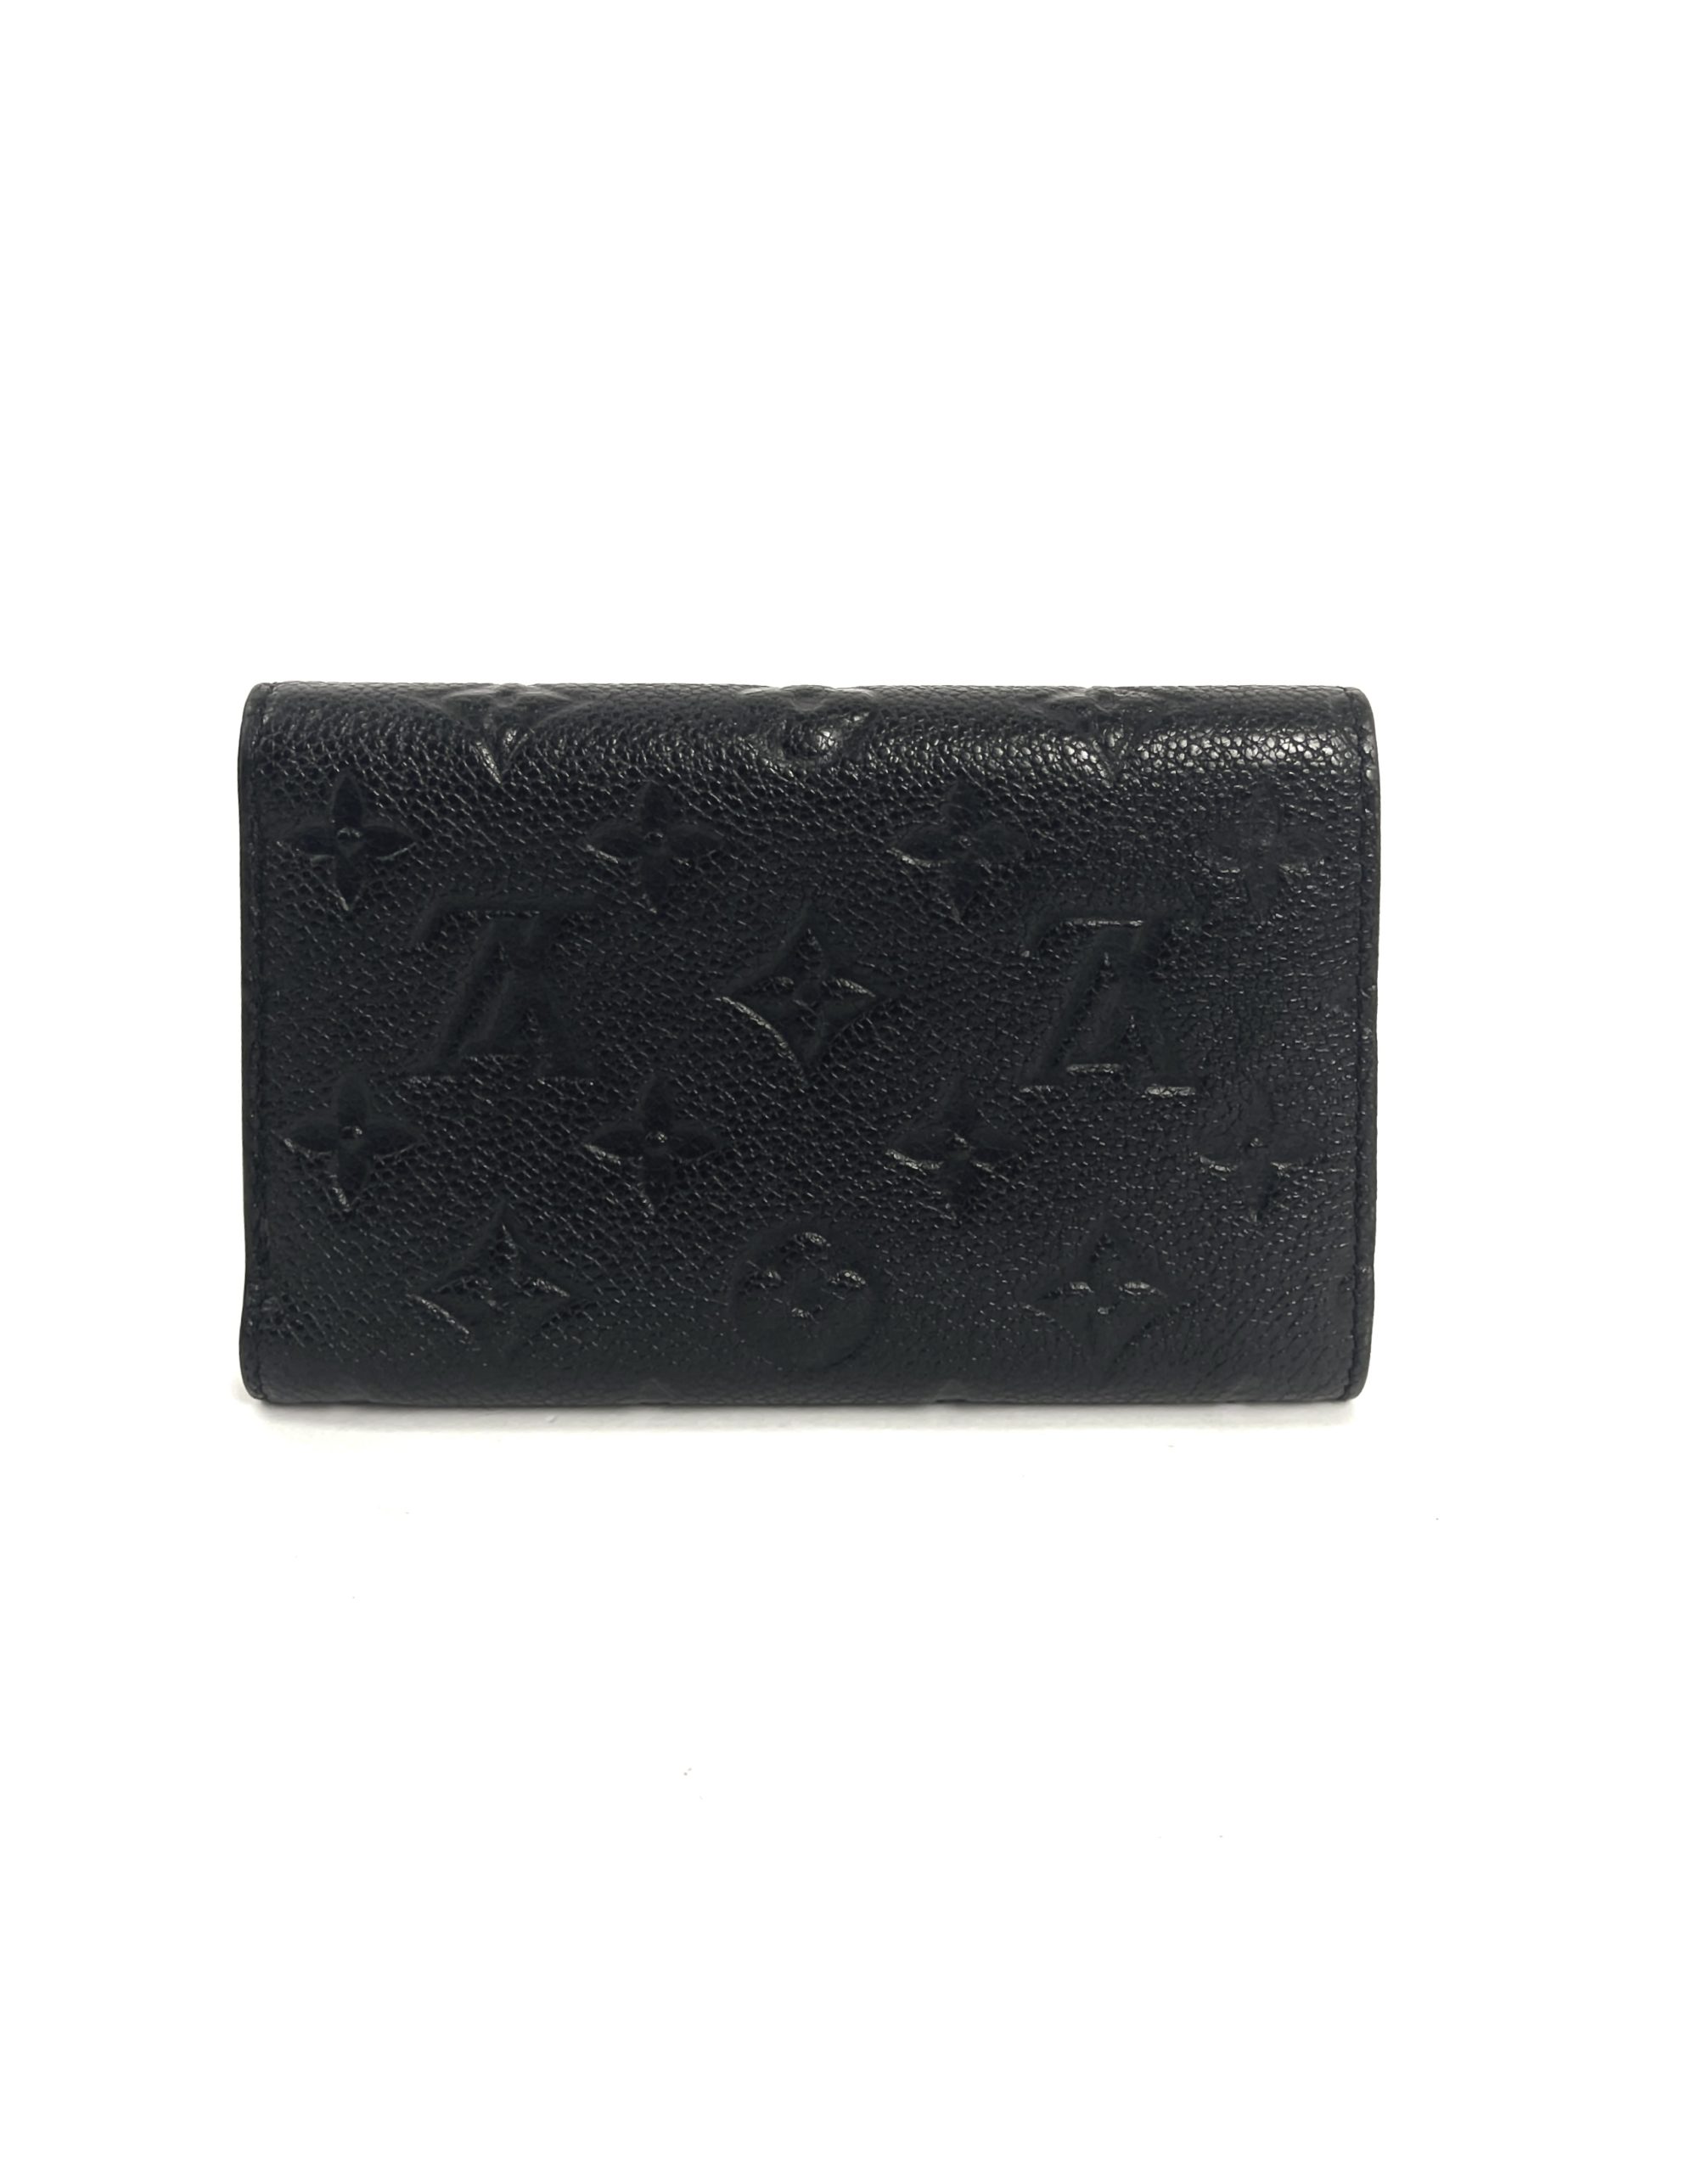 lv monogram black wallet